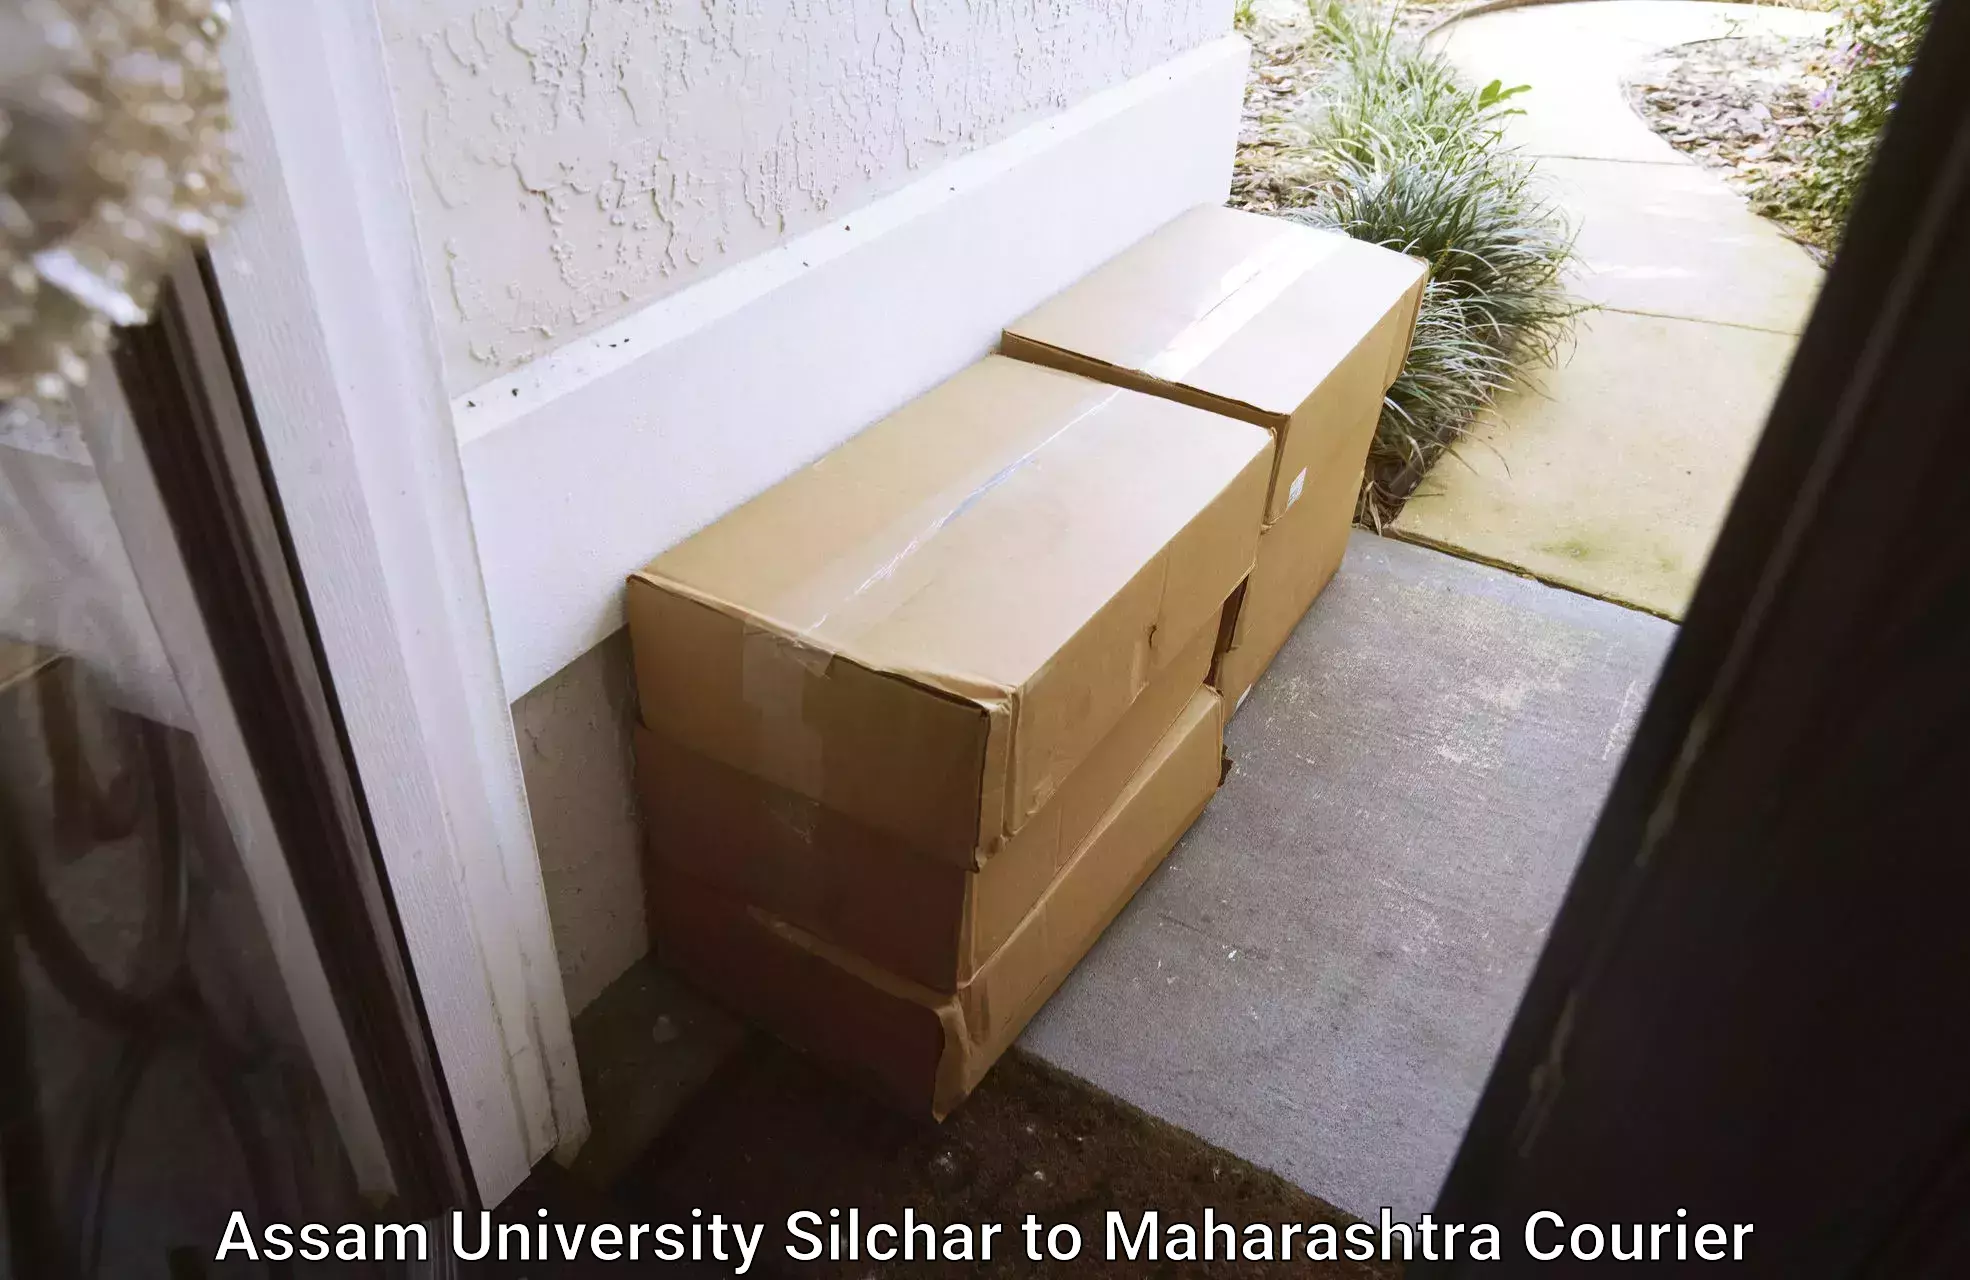 Fast delivery service Assam University Silchar to Vaduj